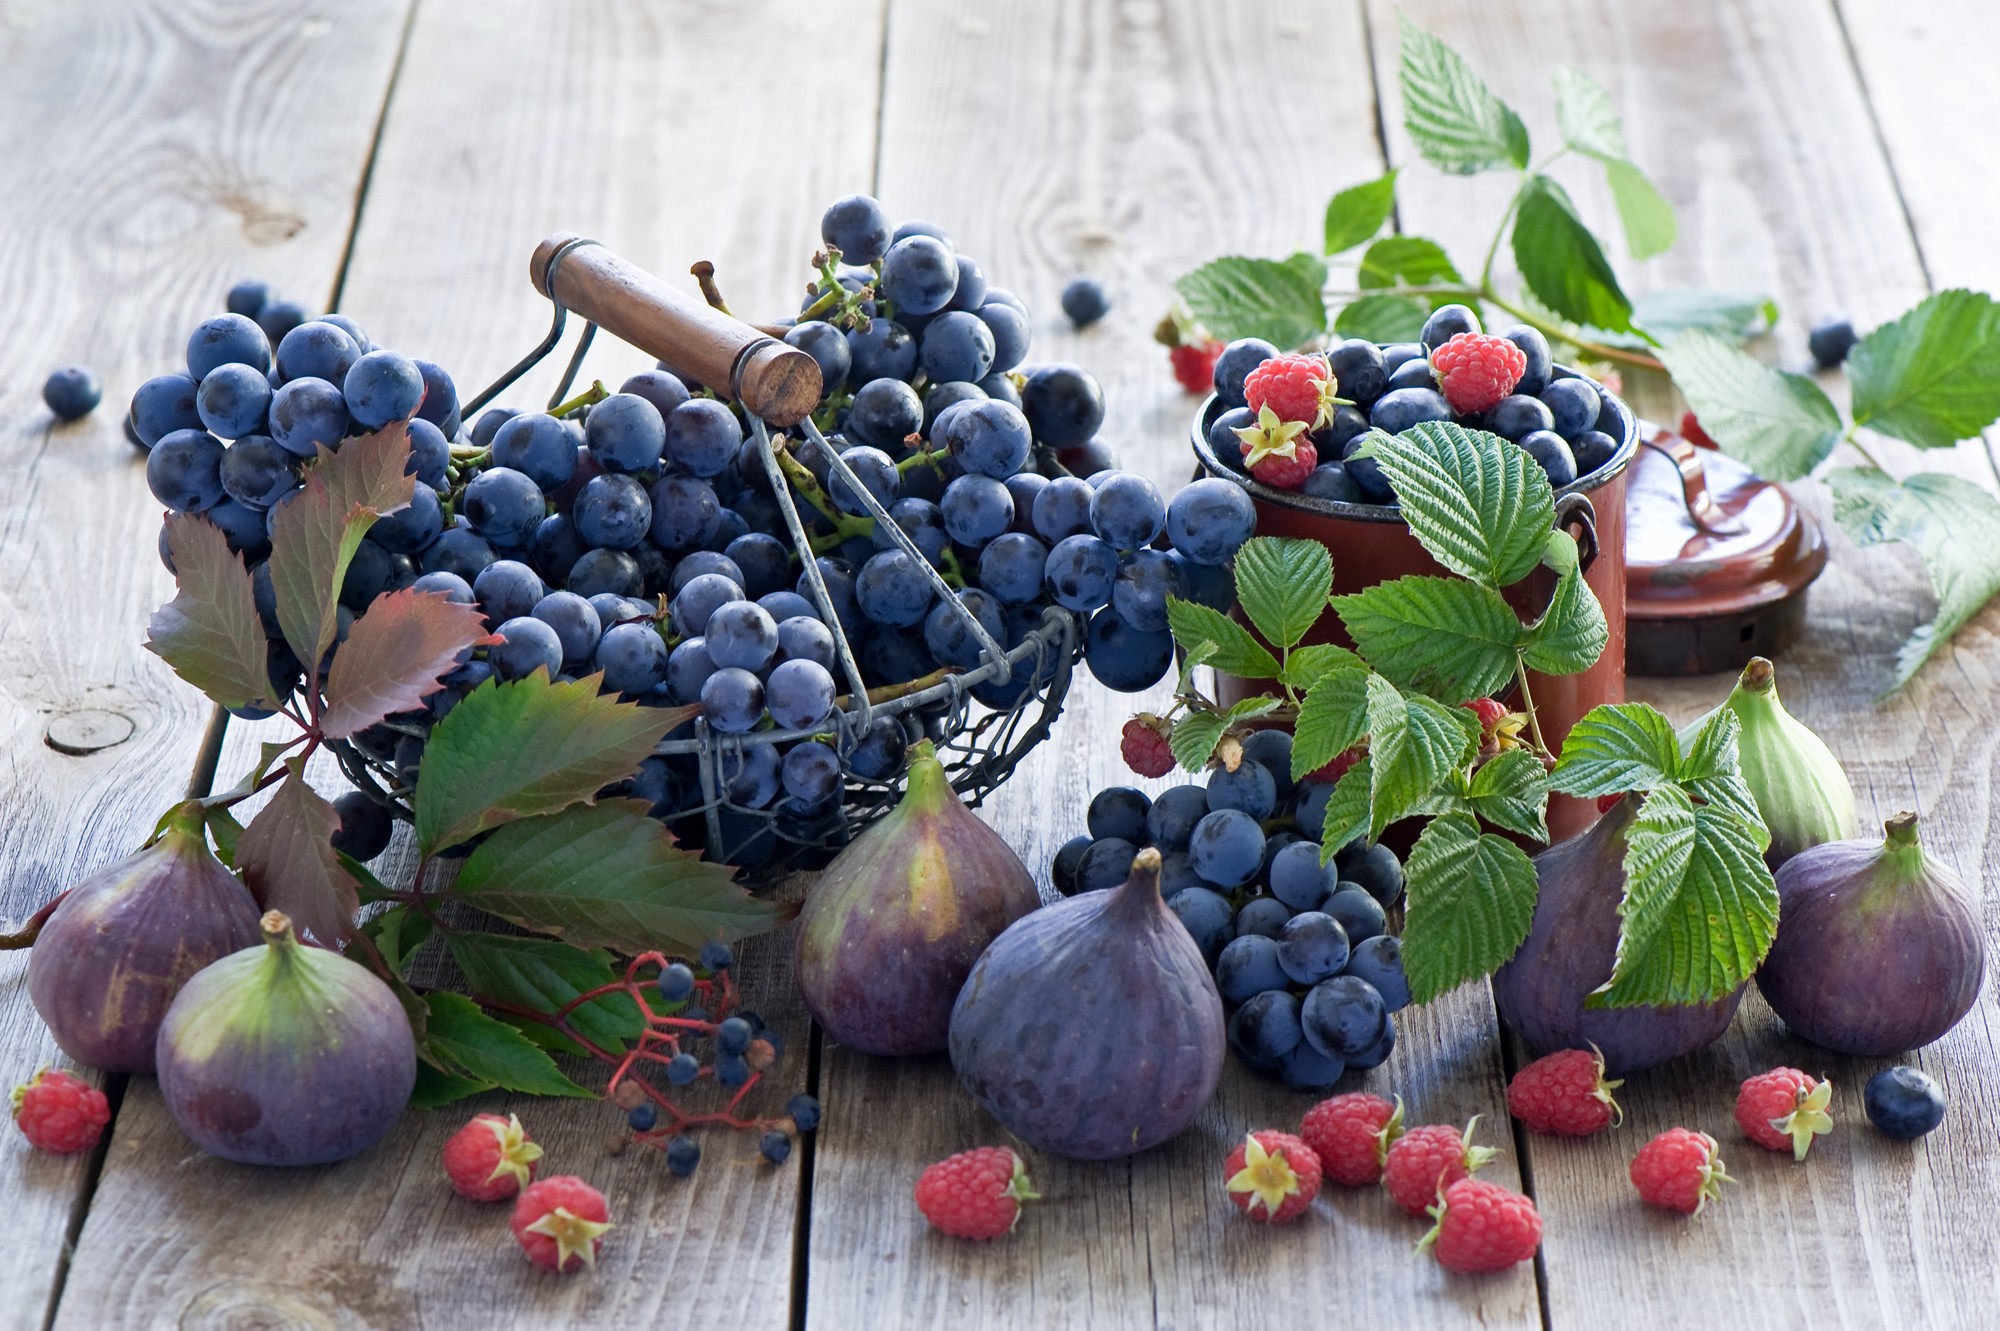 General 2000x1331 food fruit grapes wooden surface baskets berries raspberries Black Grapes closeup